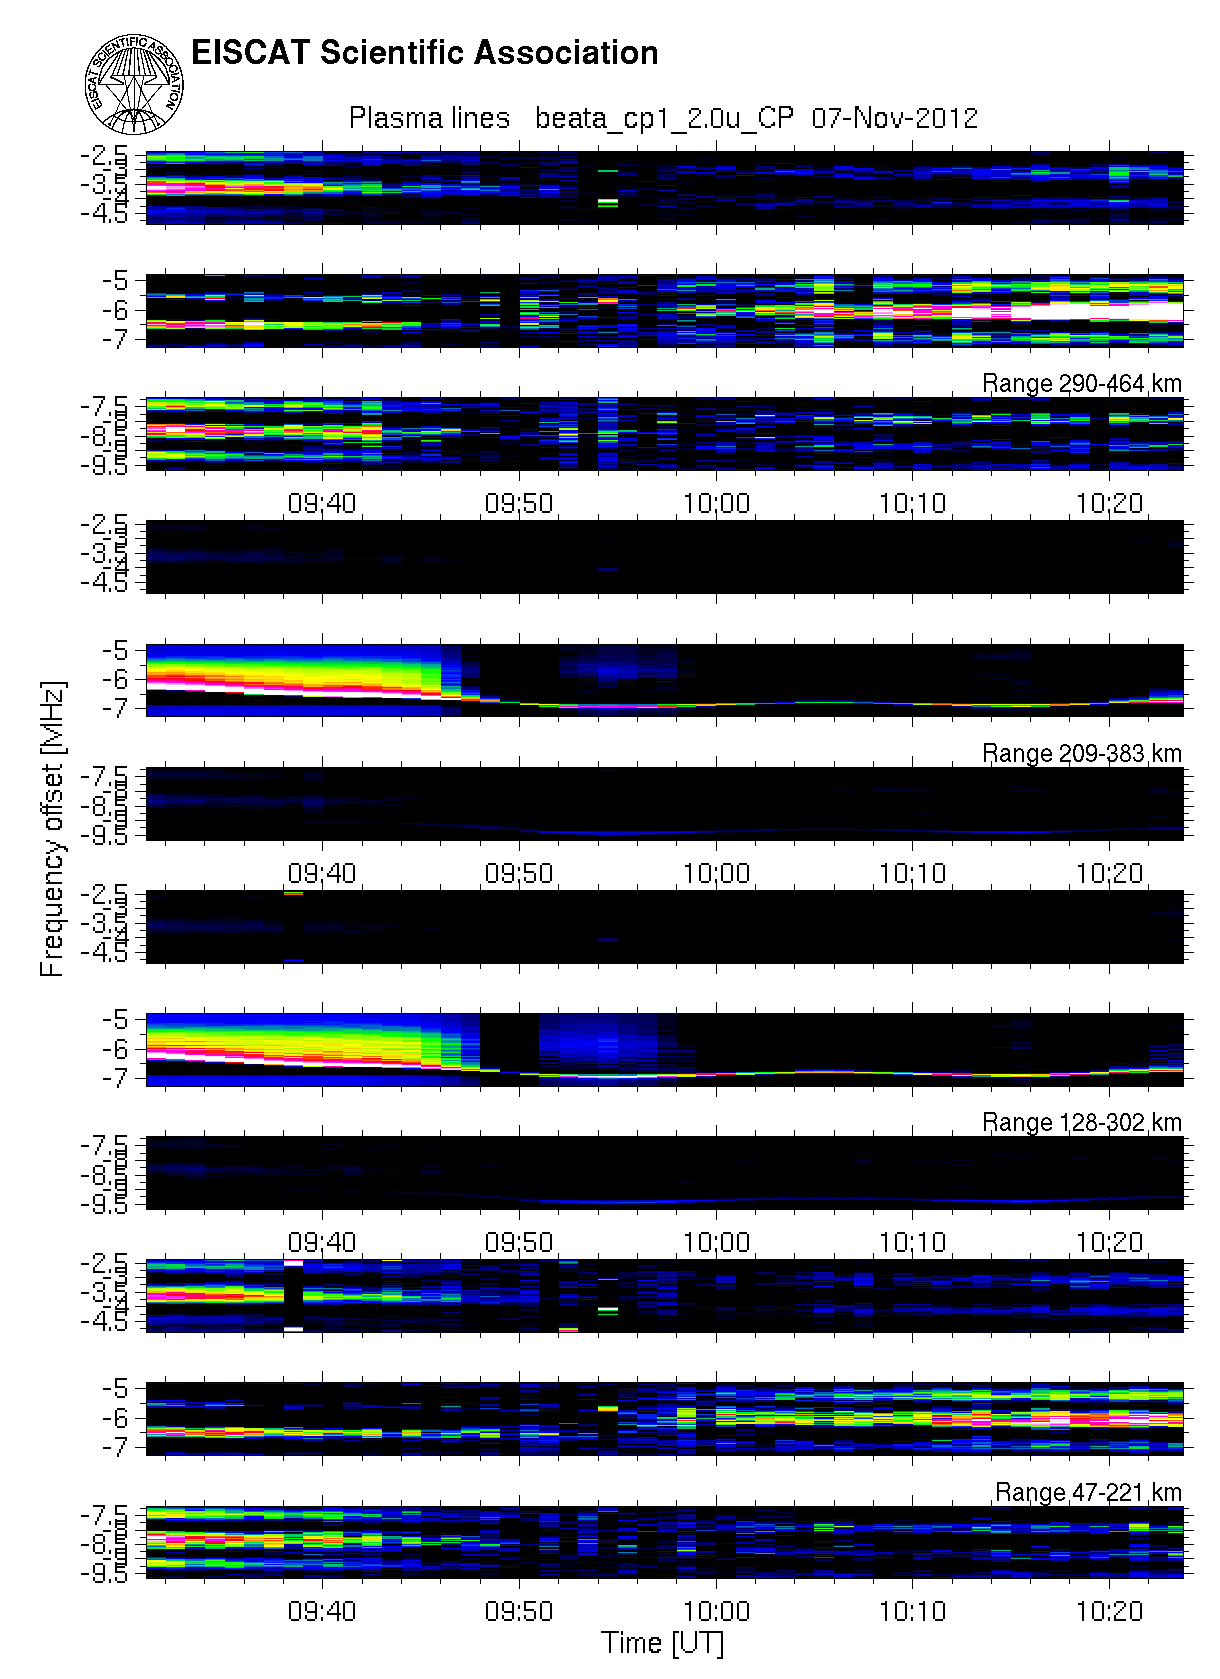 plots/2012-11-07_beata2_60_T_plasmaline.png